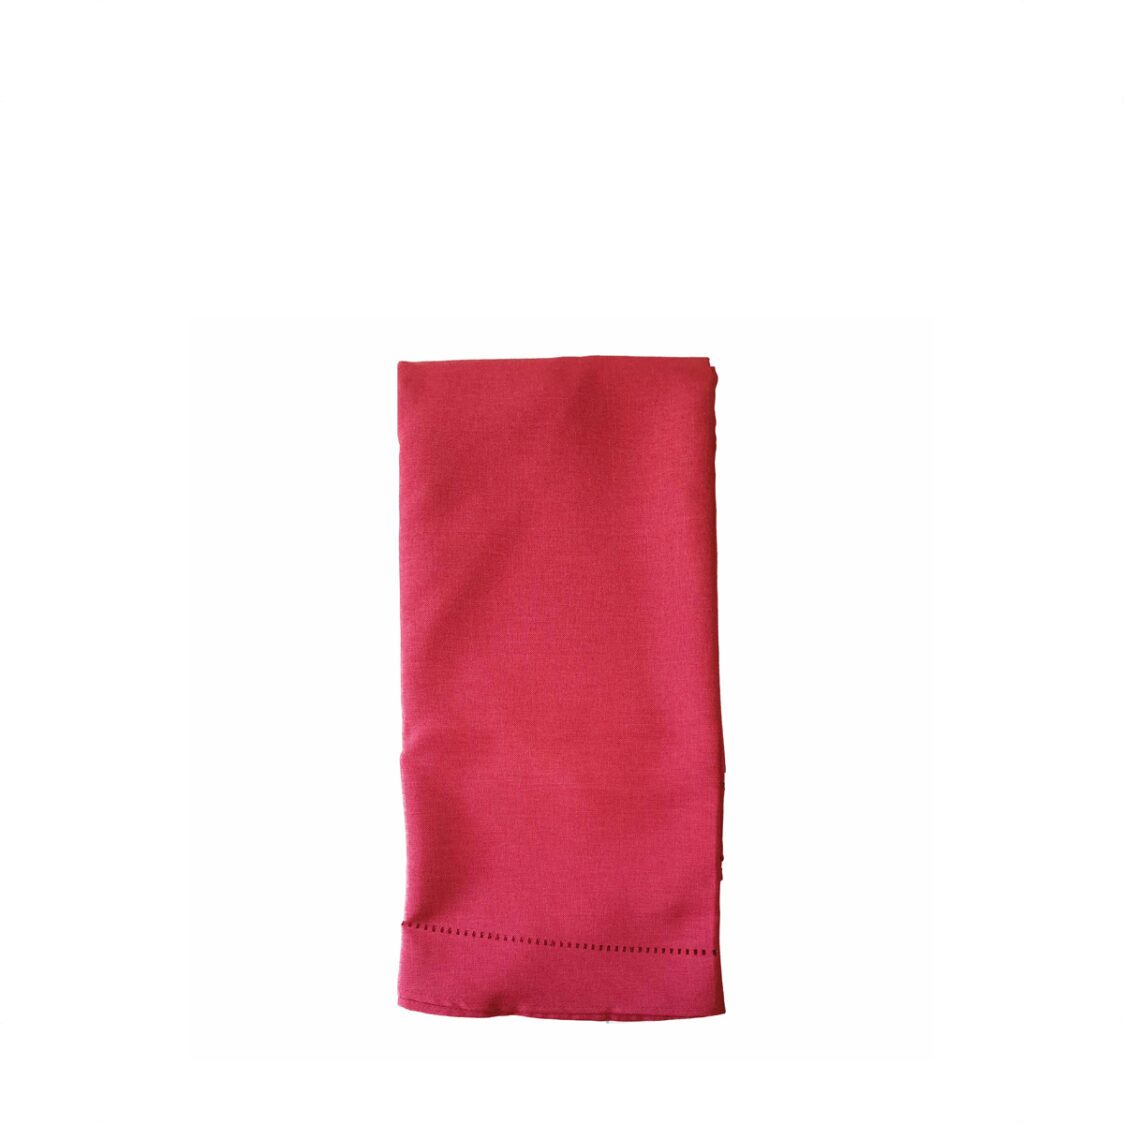 Rapee Sonia Tablecloth Red 180cm